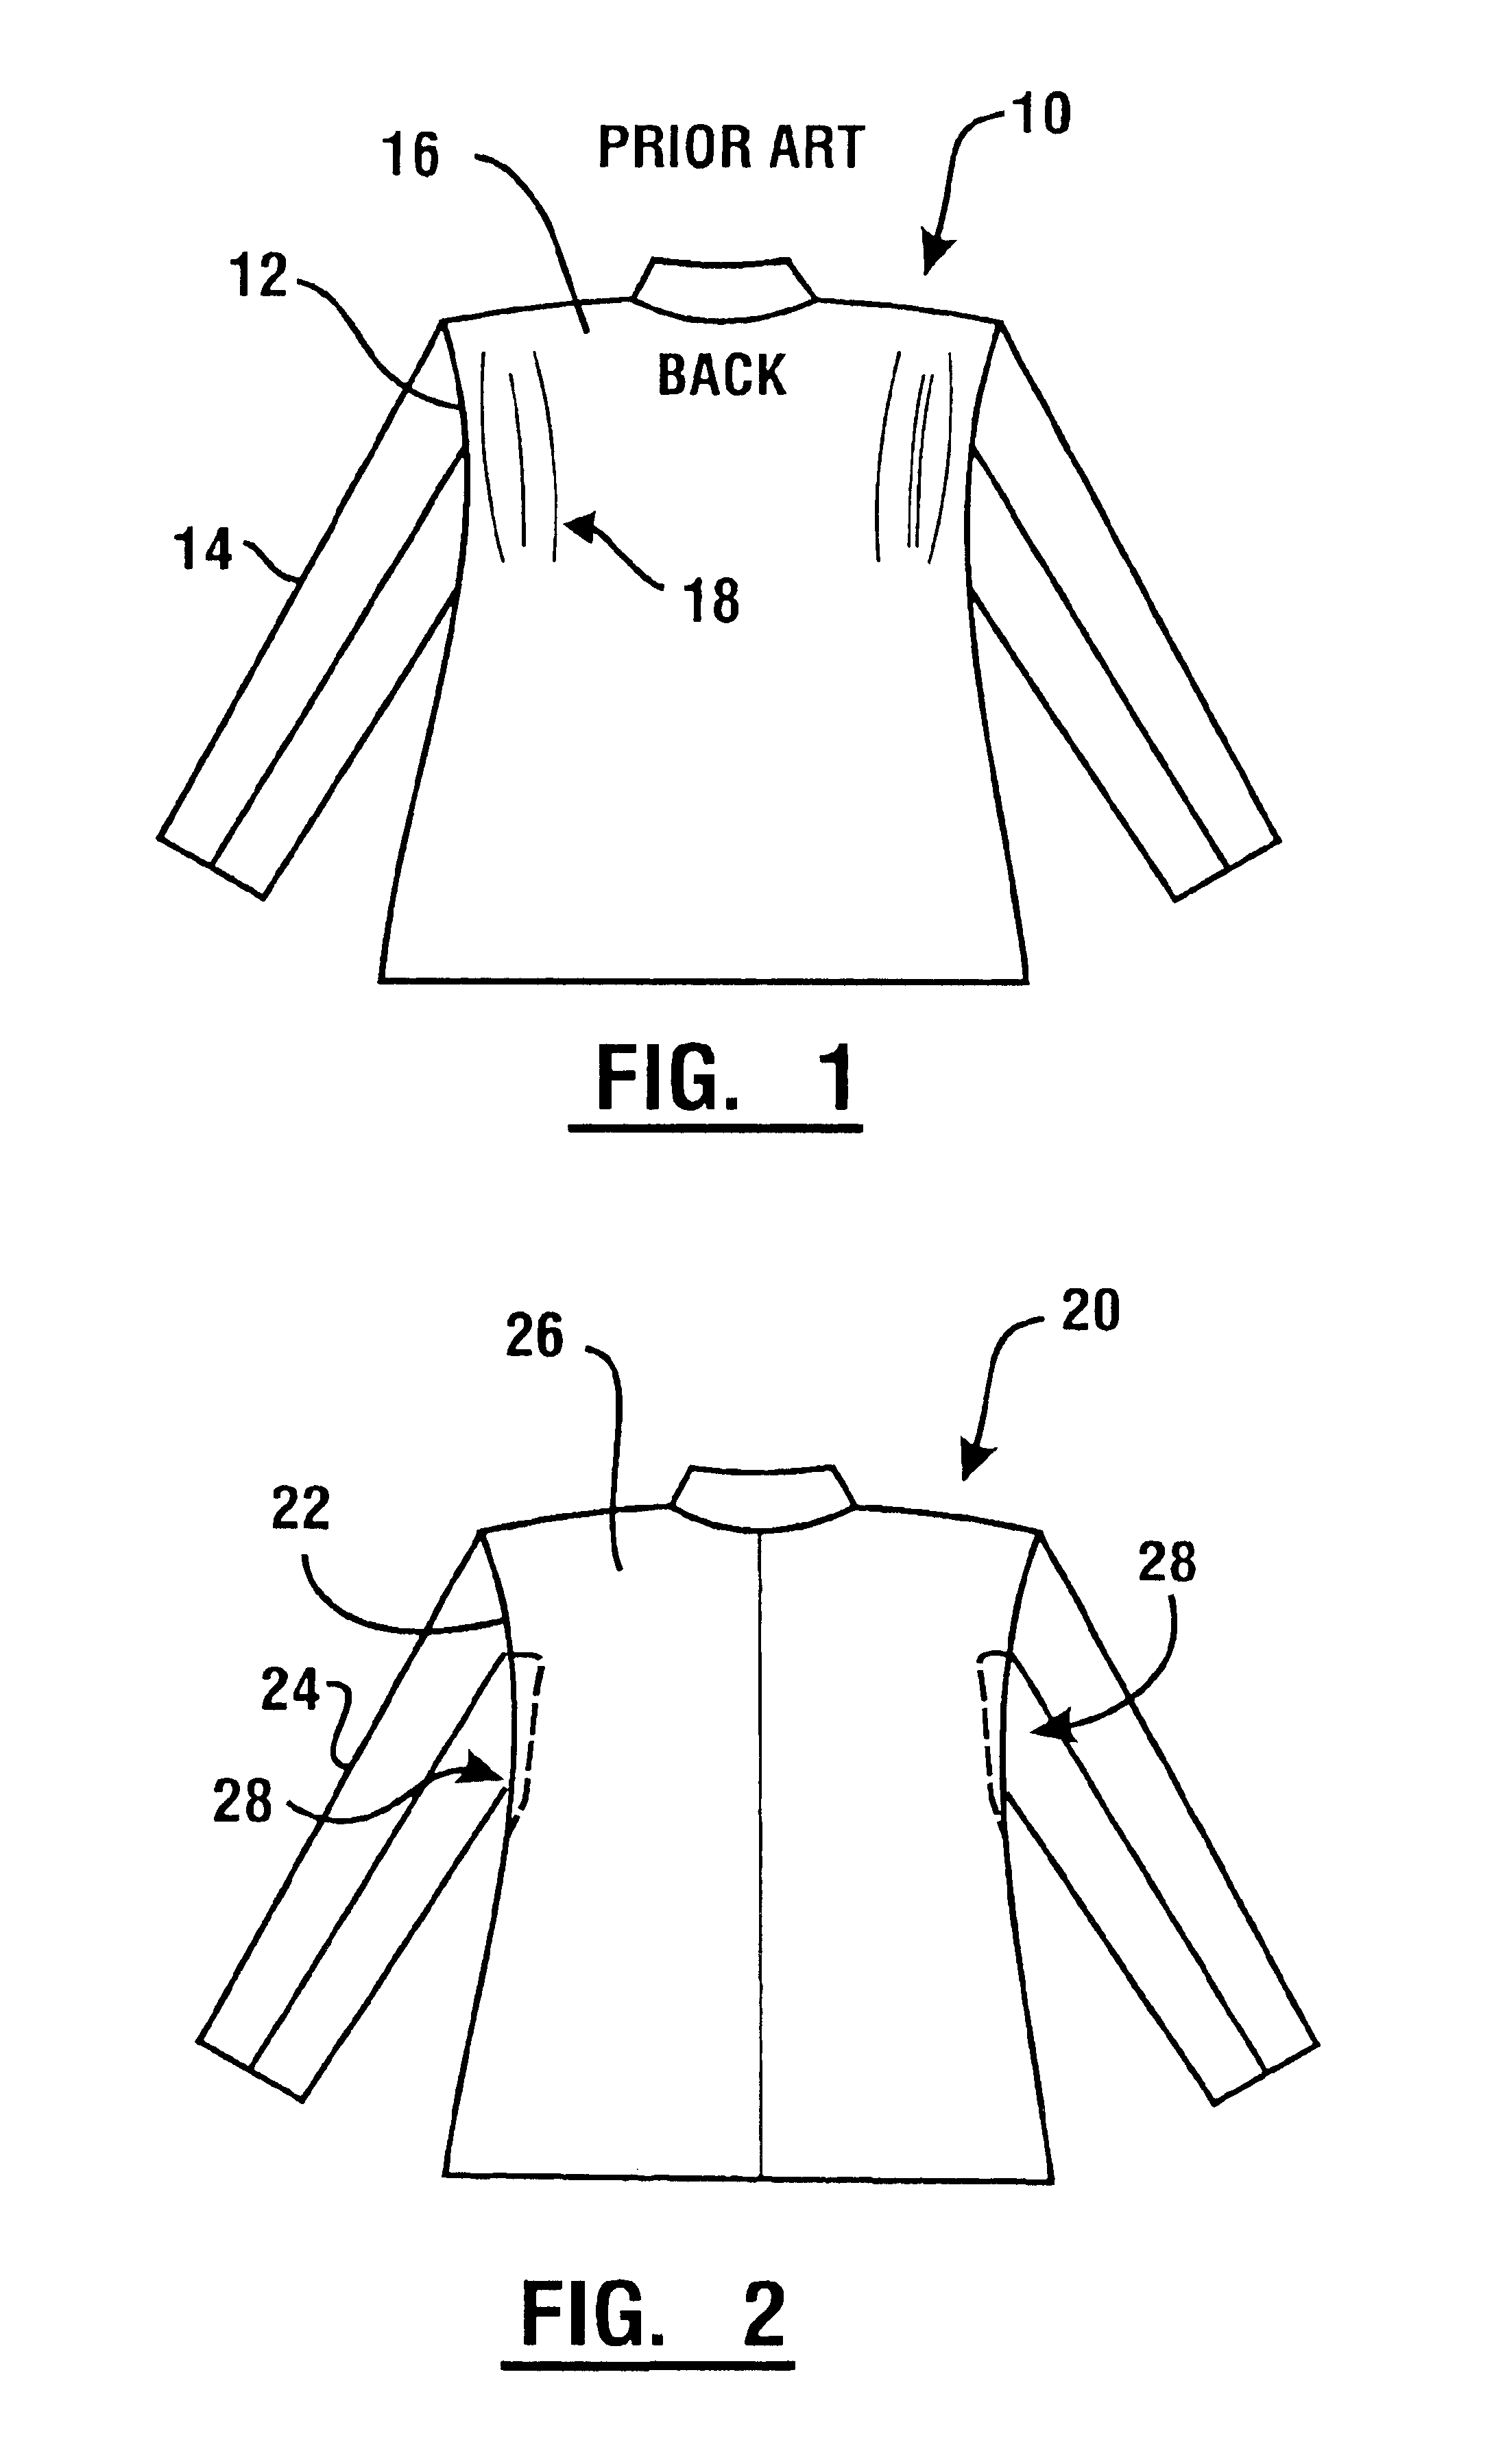 Self-adjusting garment